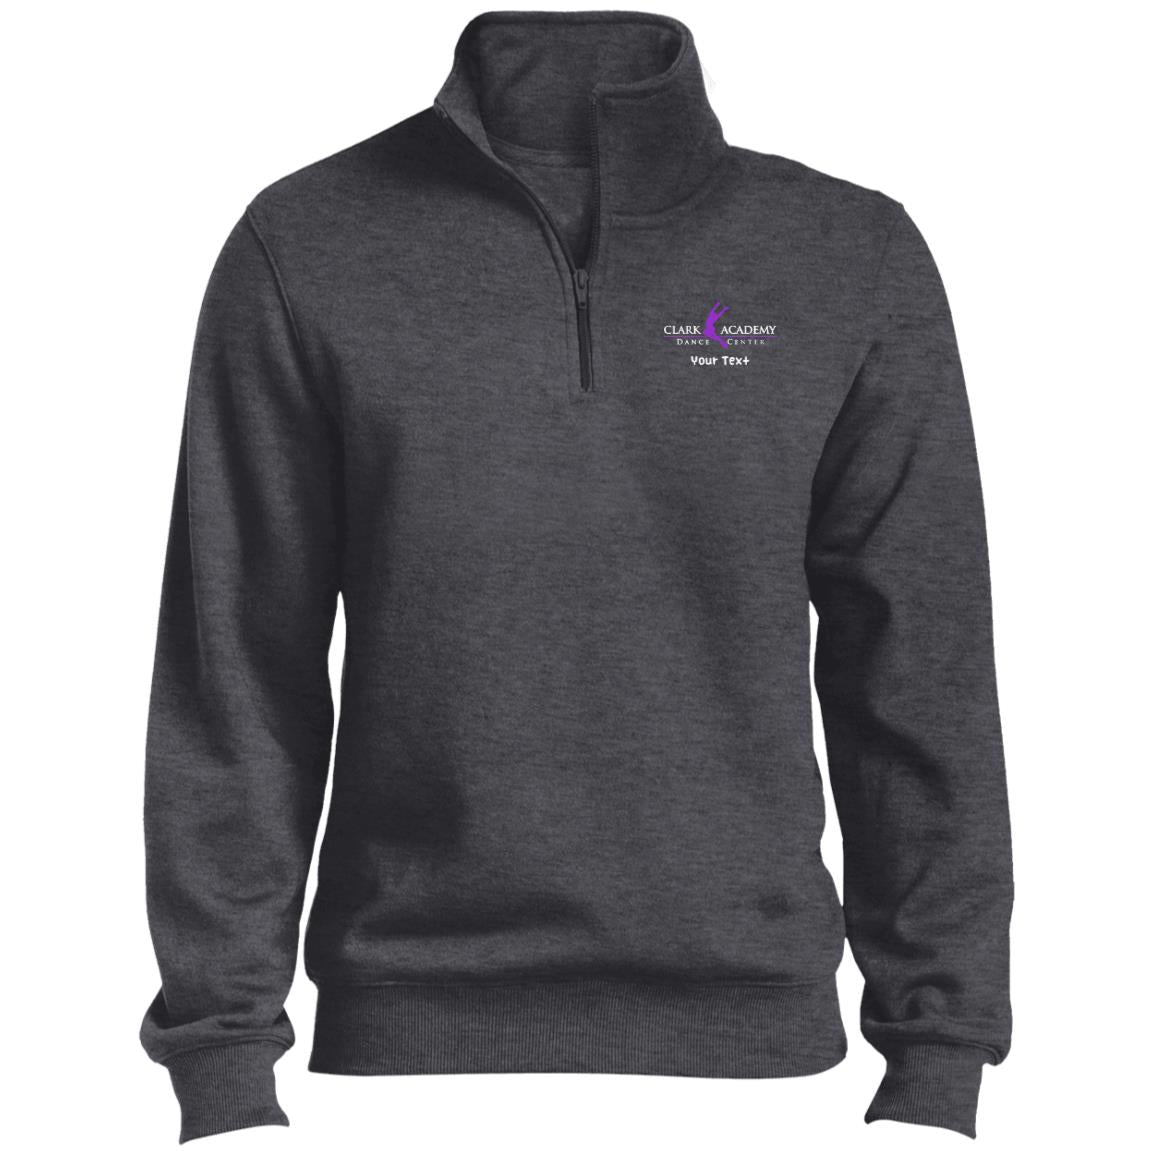 CADC 1/4 Zip Sweatshirt - With Personalization